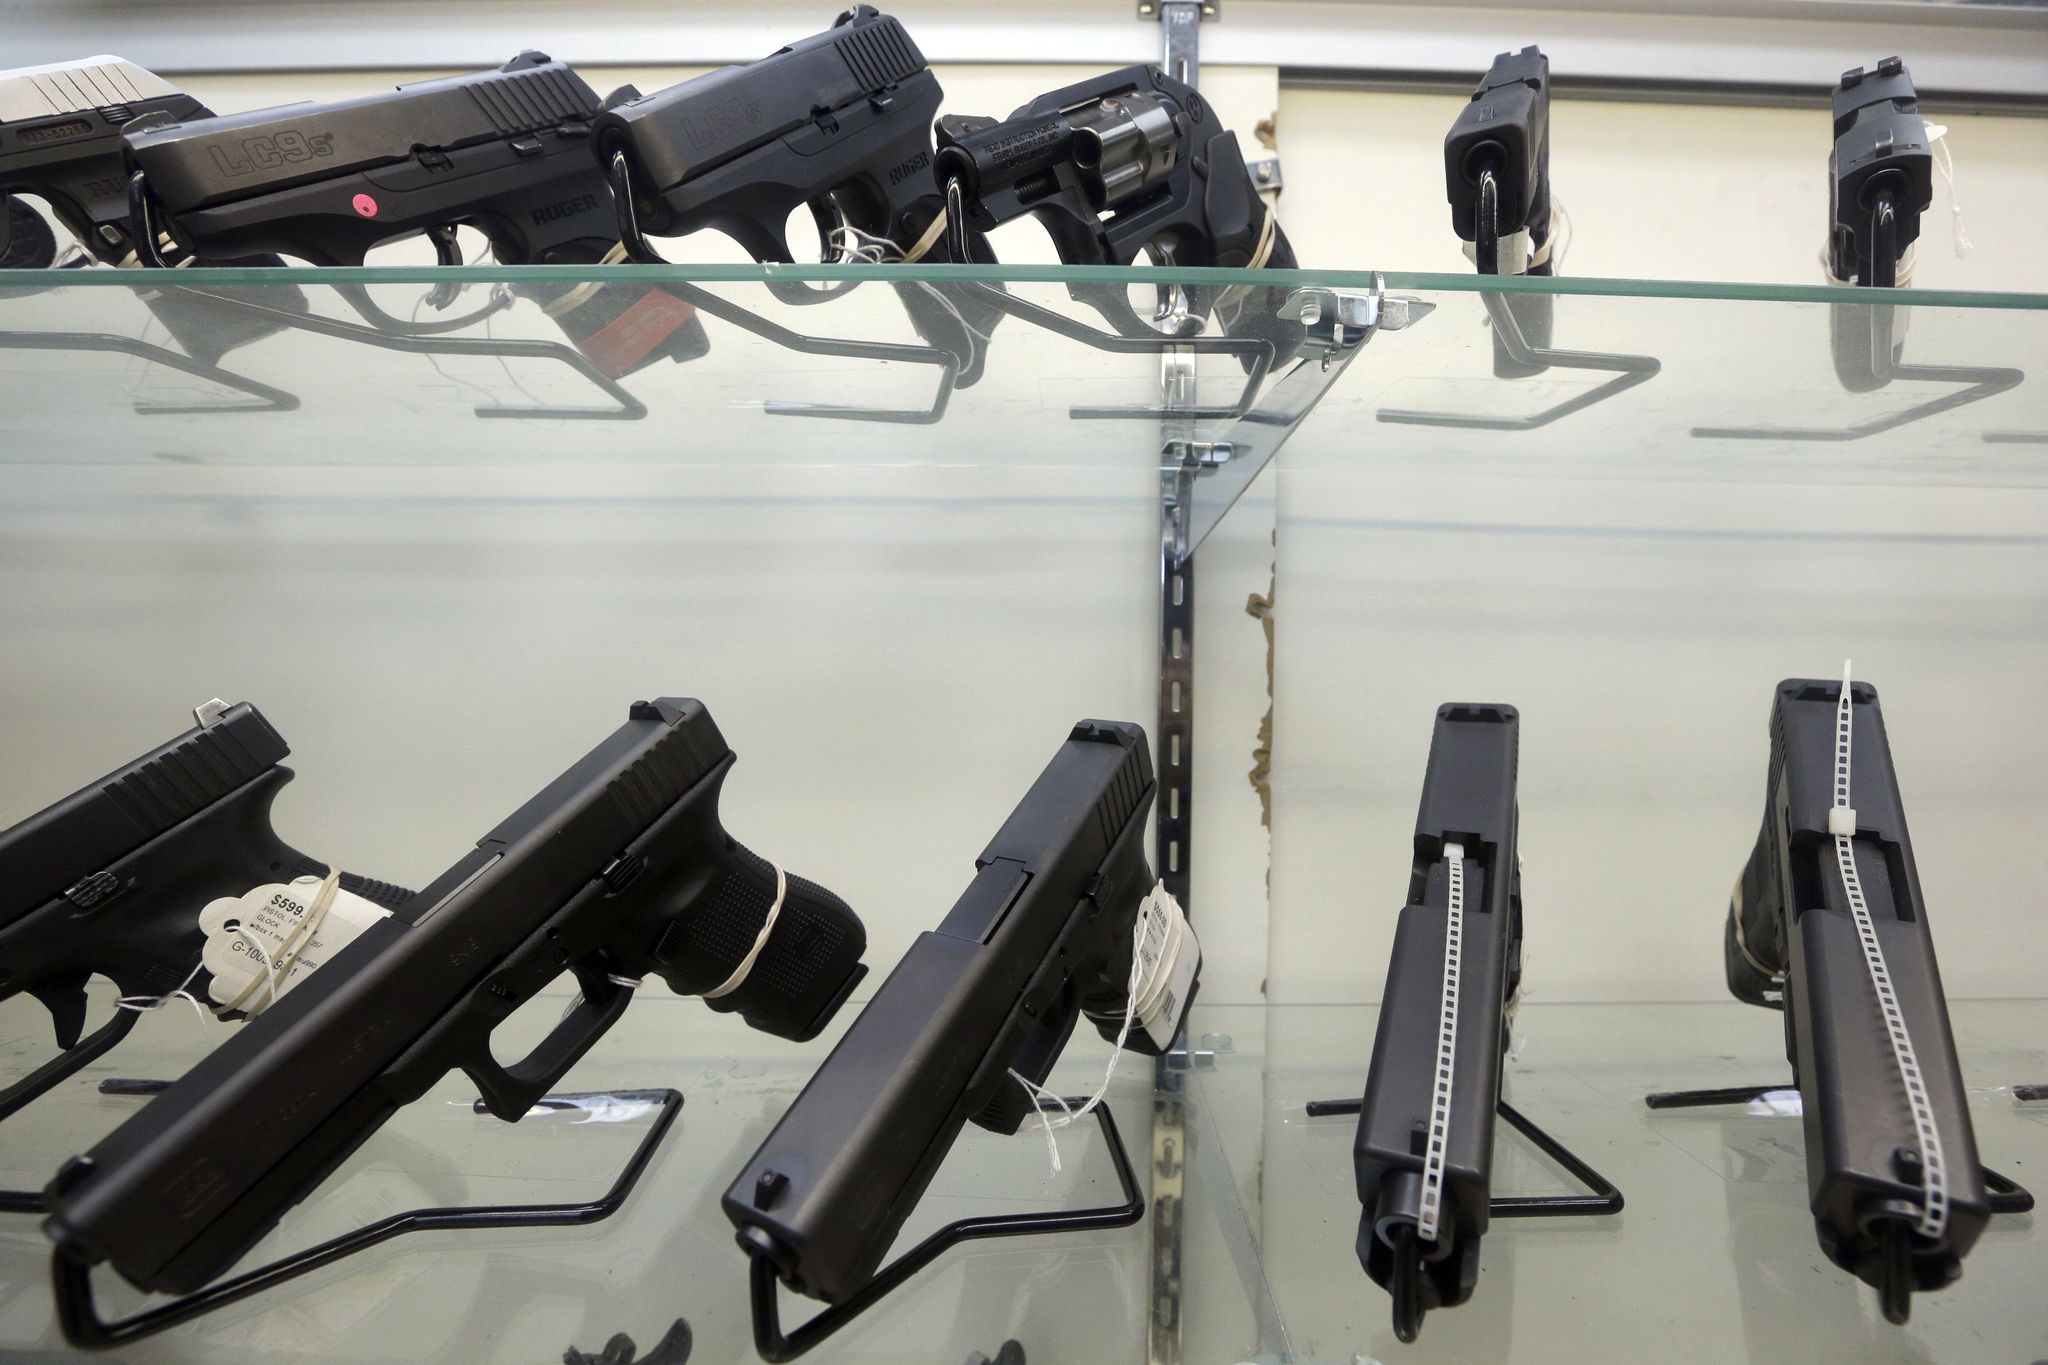 handguns in a display case